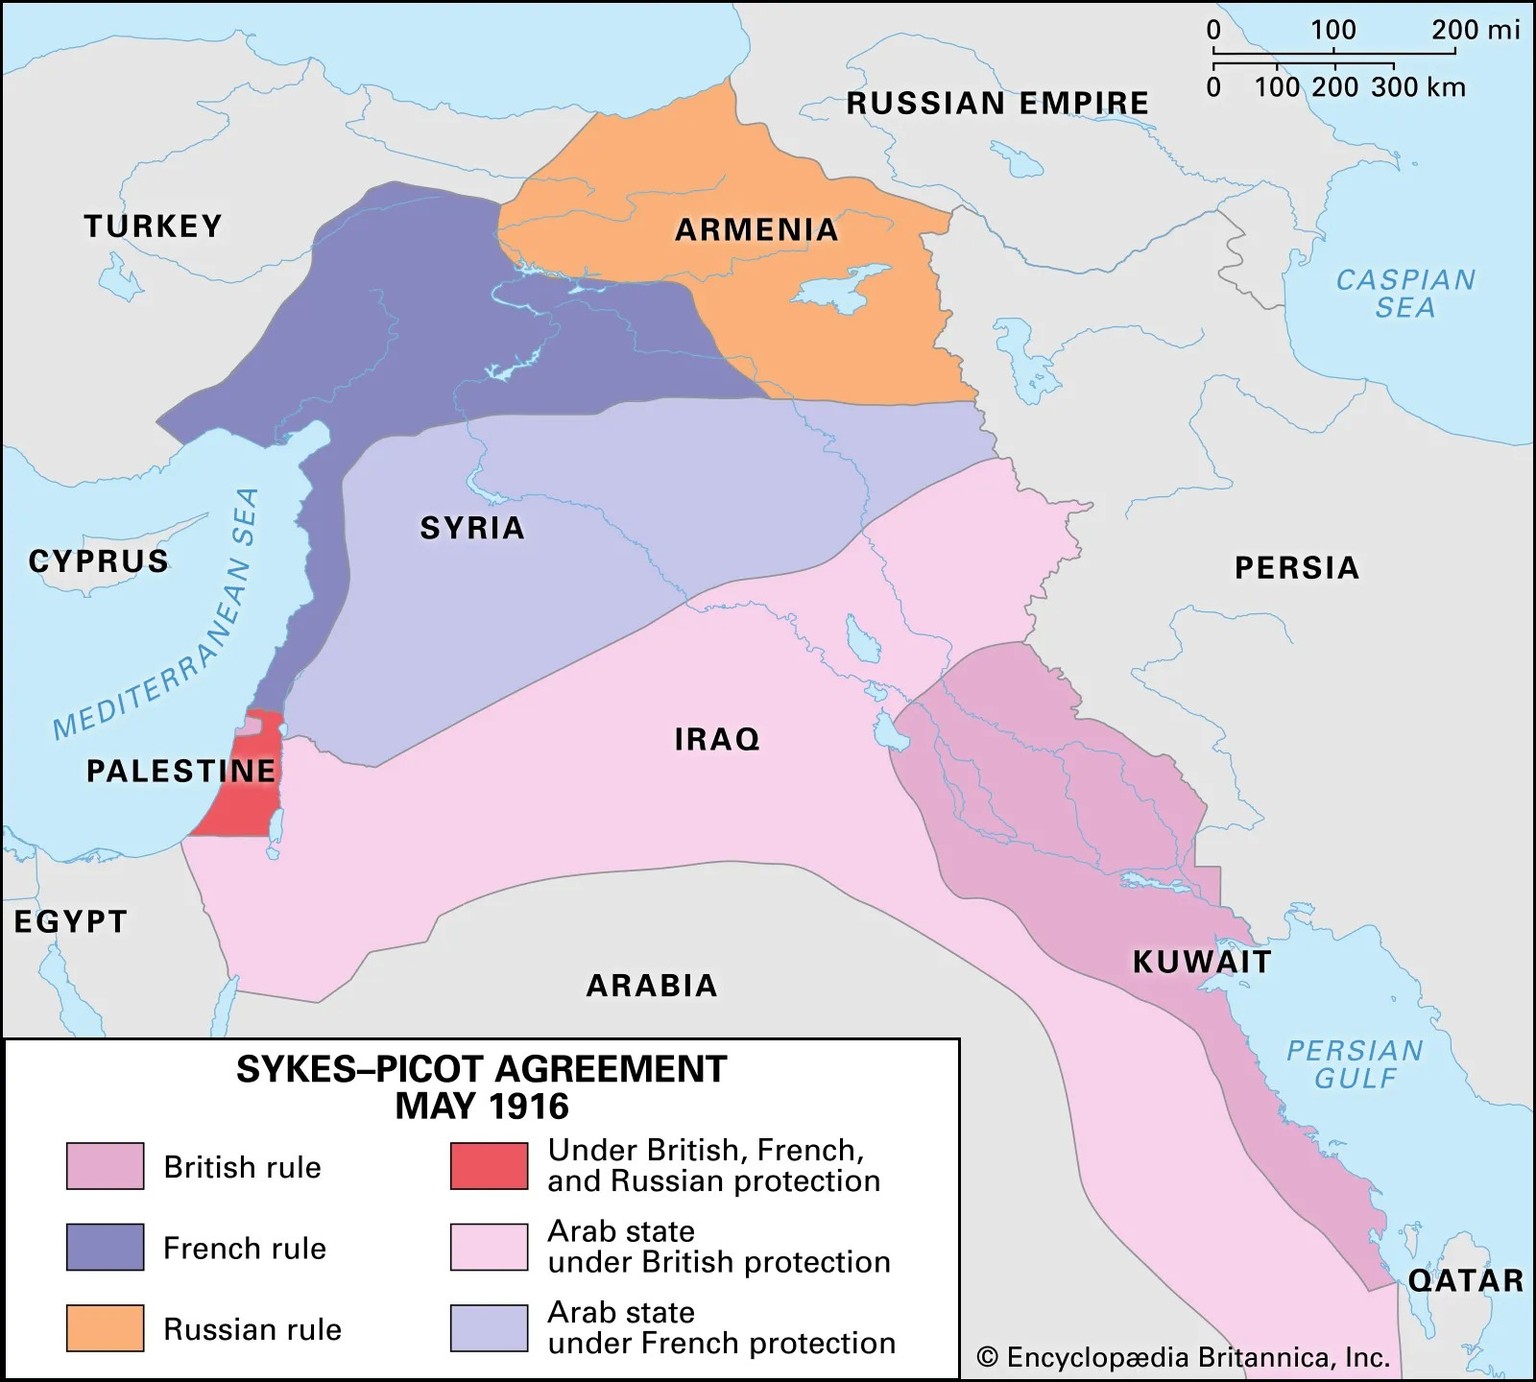 Sykes-Picot-Abkommen, 1916
https://www.britannica.com/event/Sykes-Picot-Agreement